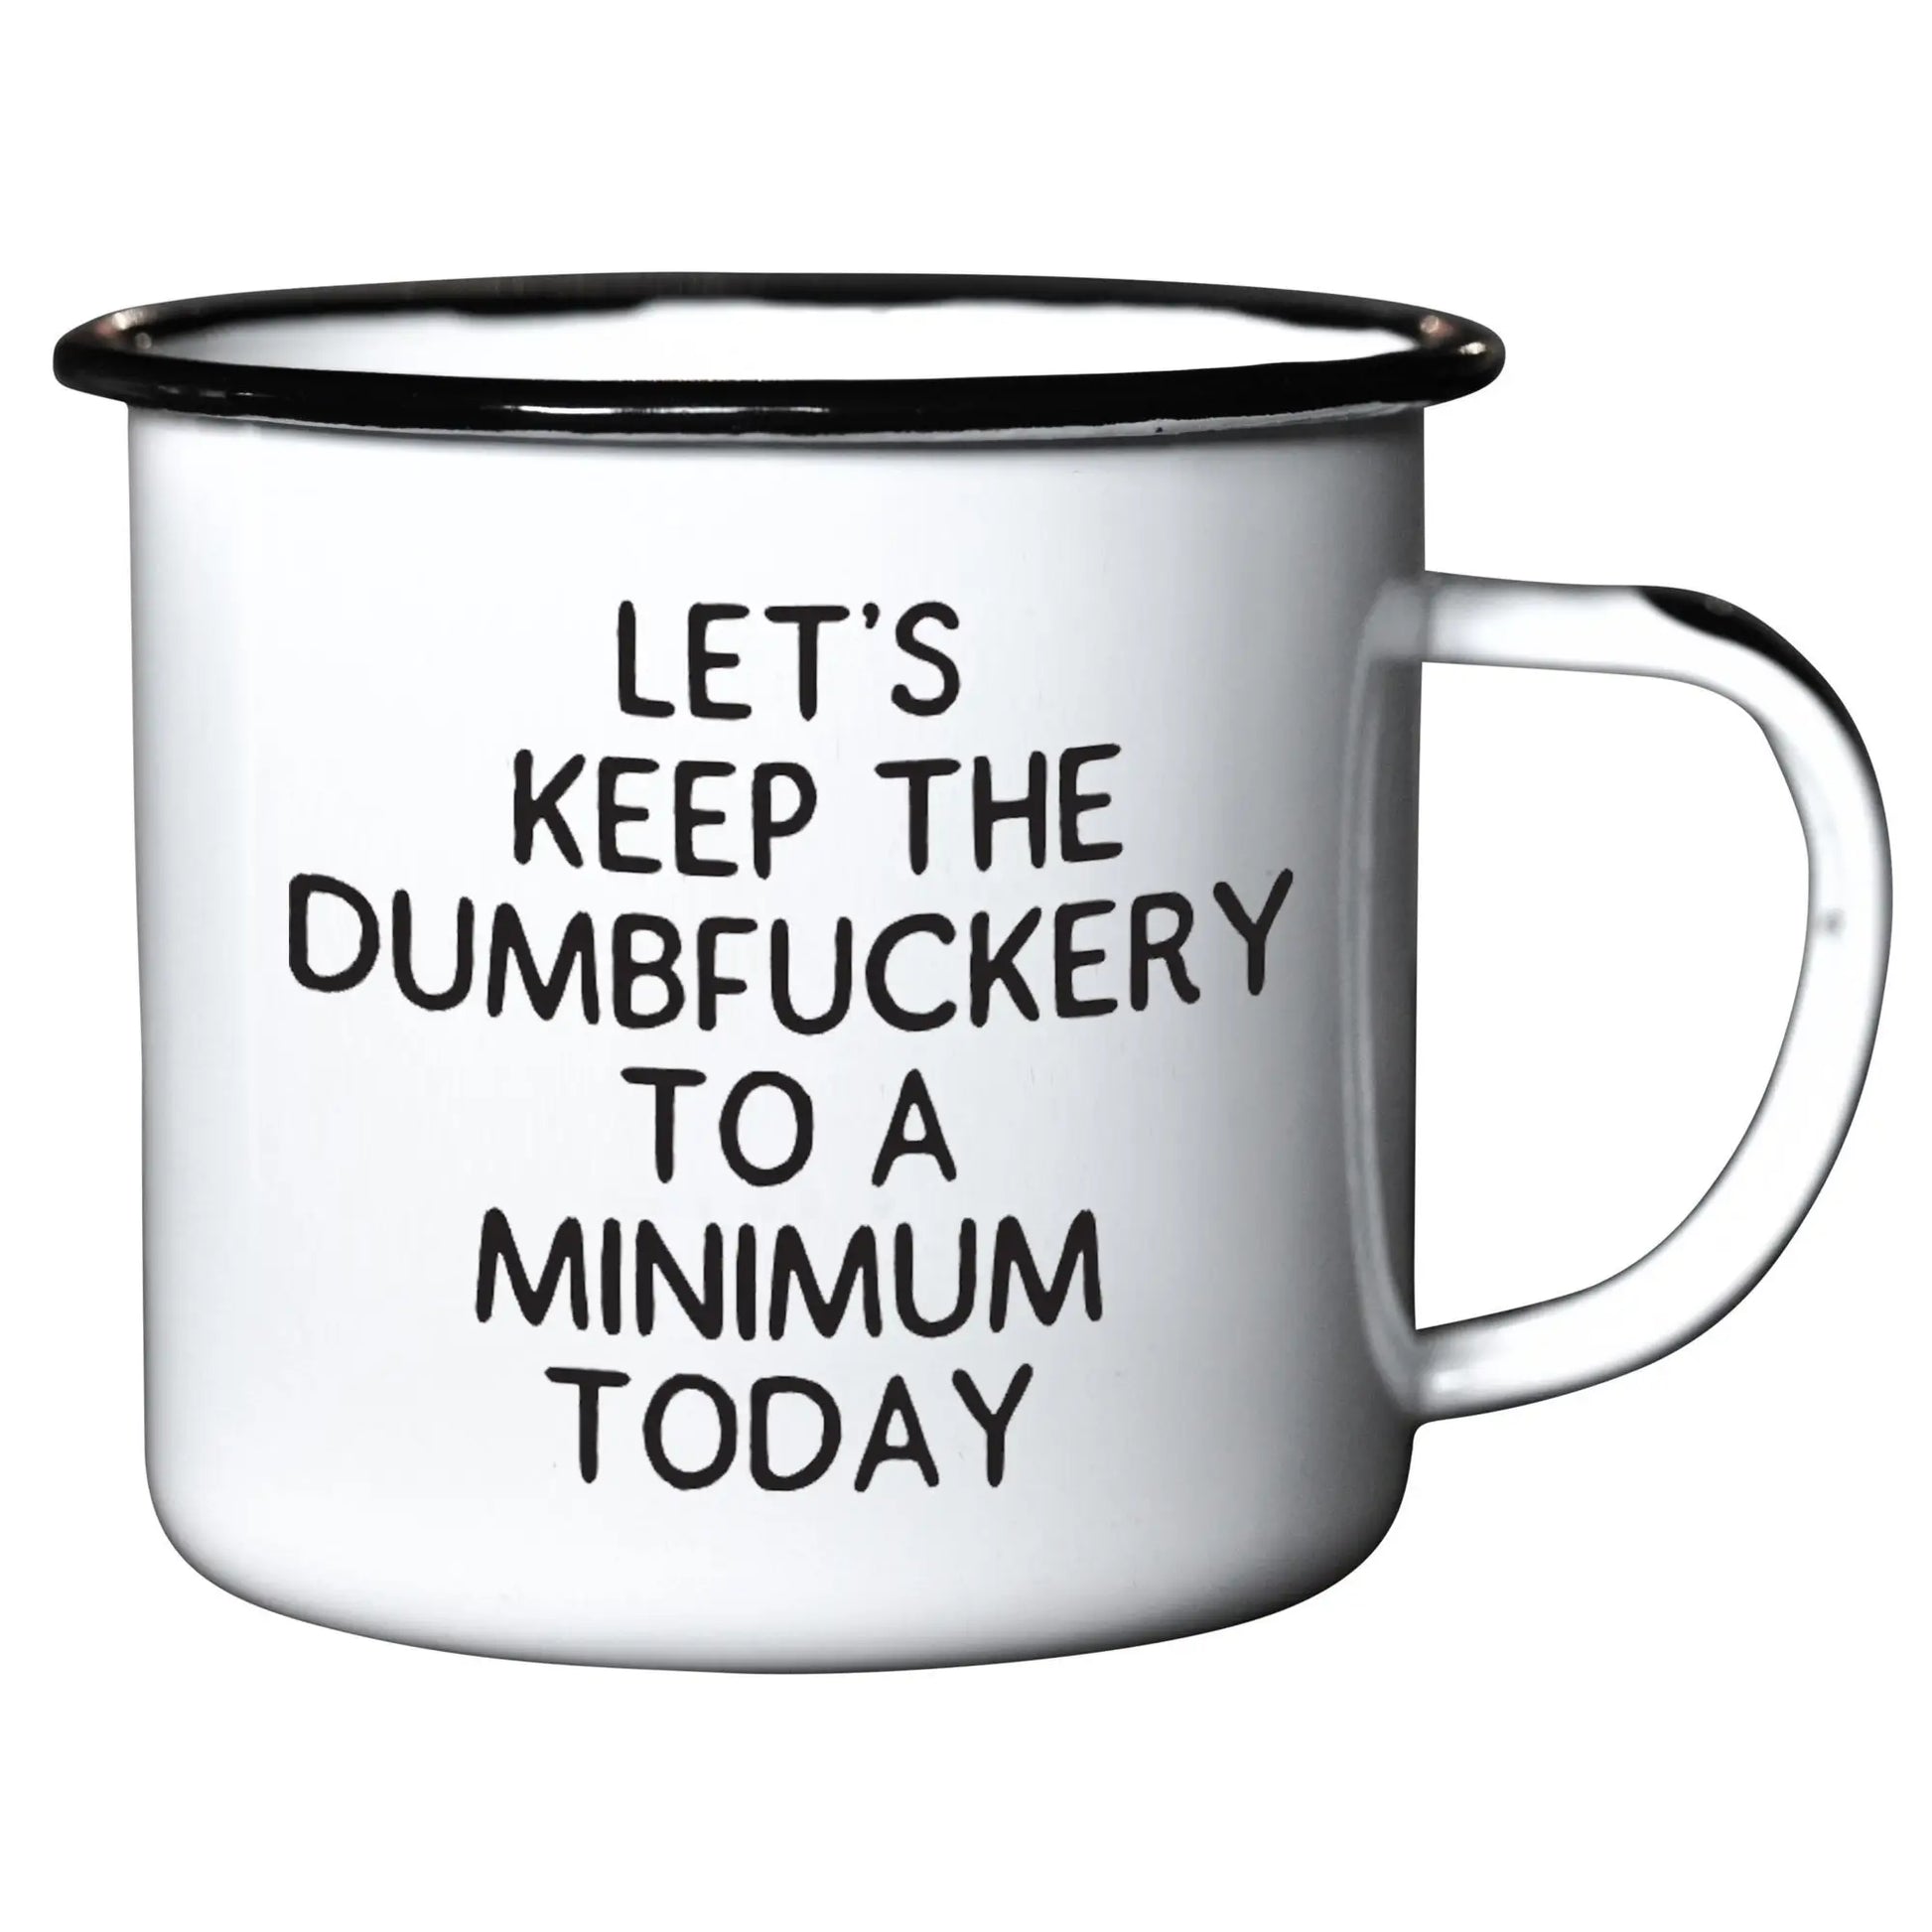 Let's Keep The Dumbfuckery To A Minimum Today - Enamel Mug - 16 oz - Mellow Monkey